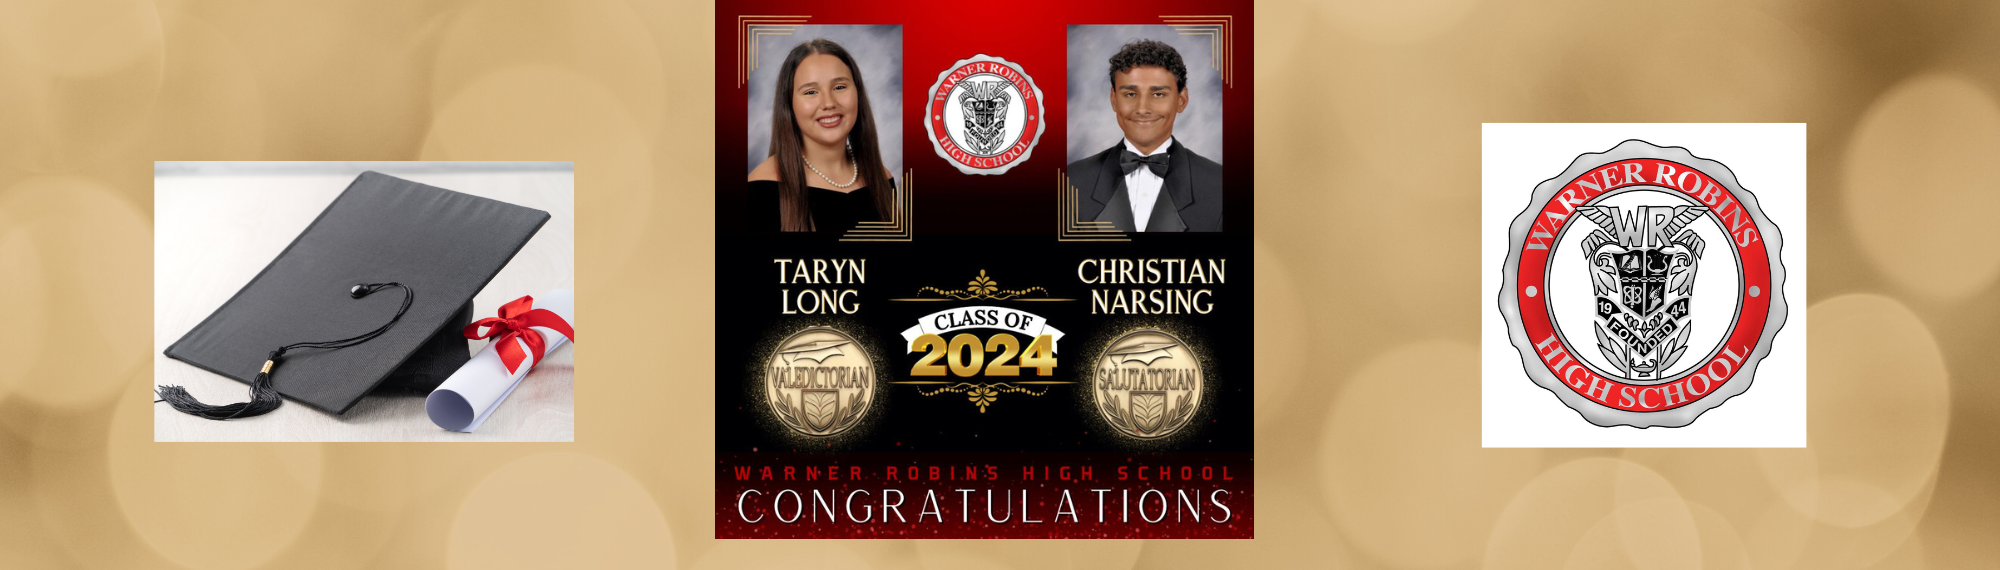 Congratulations to our 2024 Valedictorian and Salutatorian!